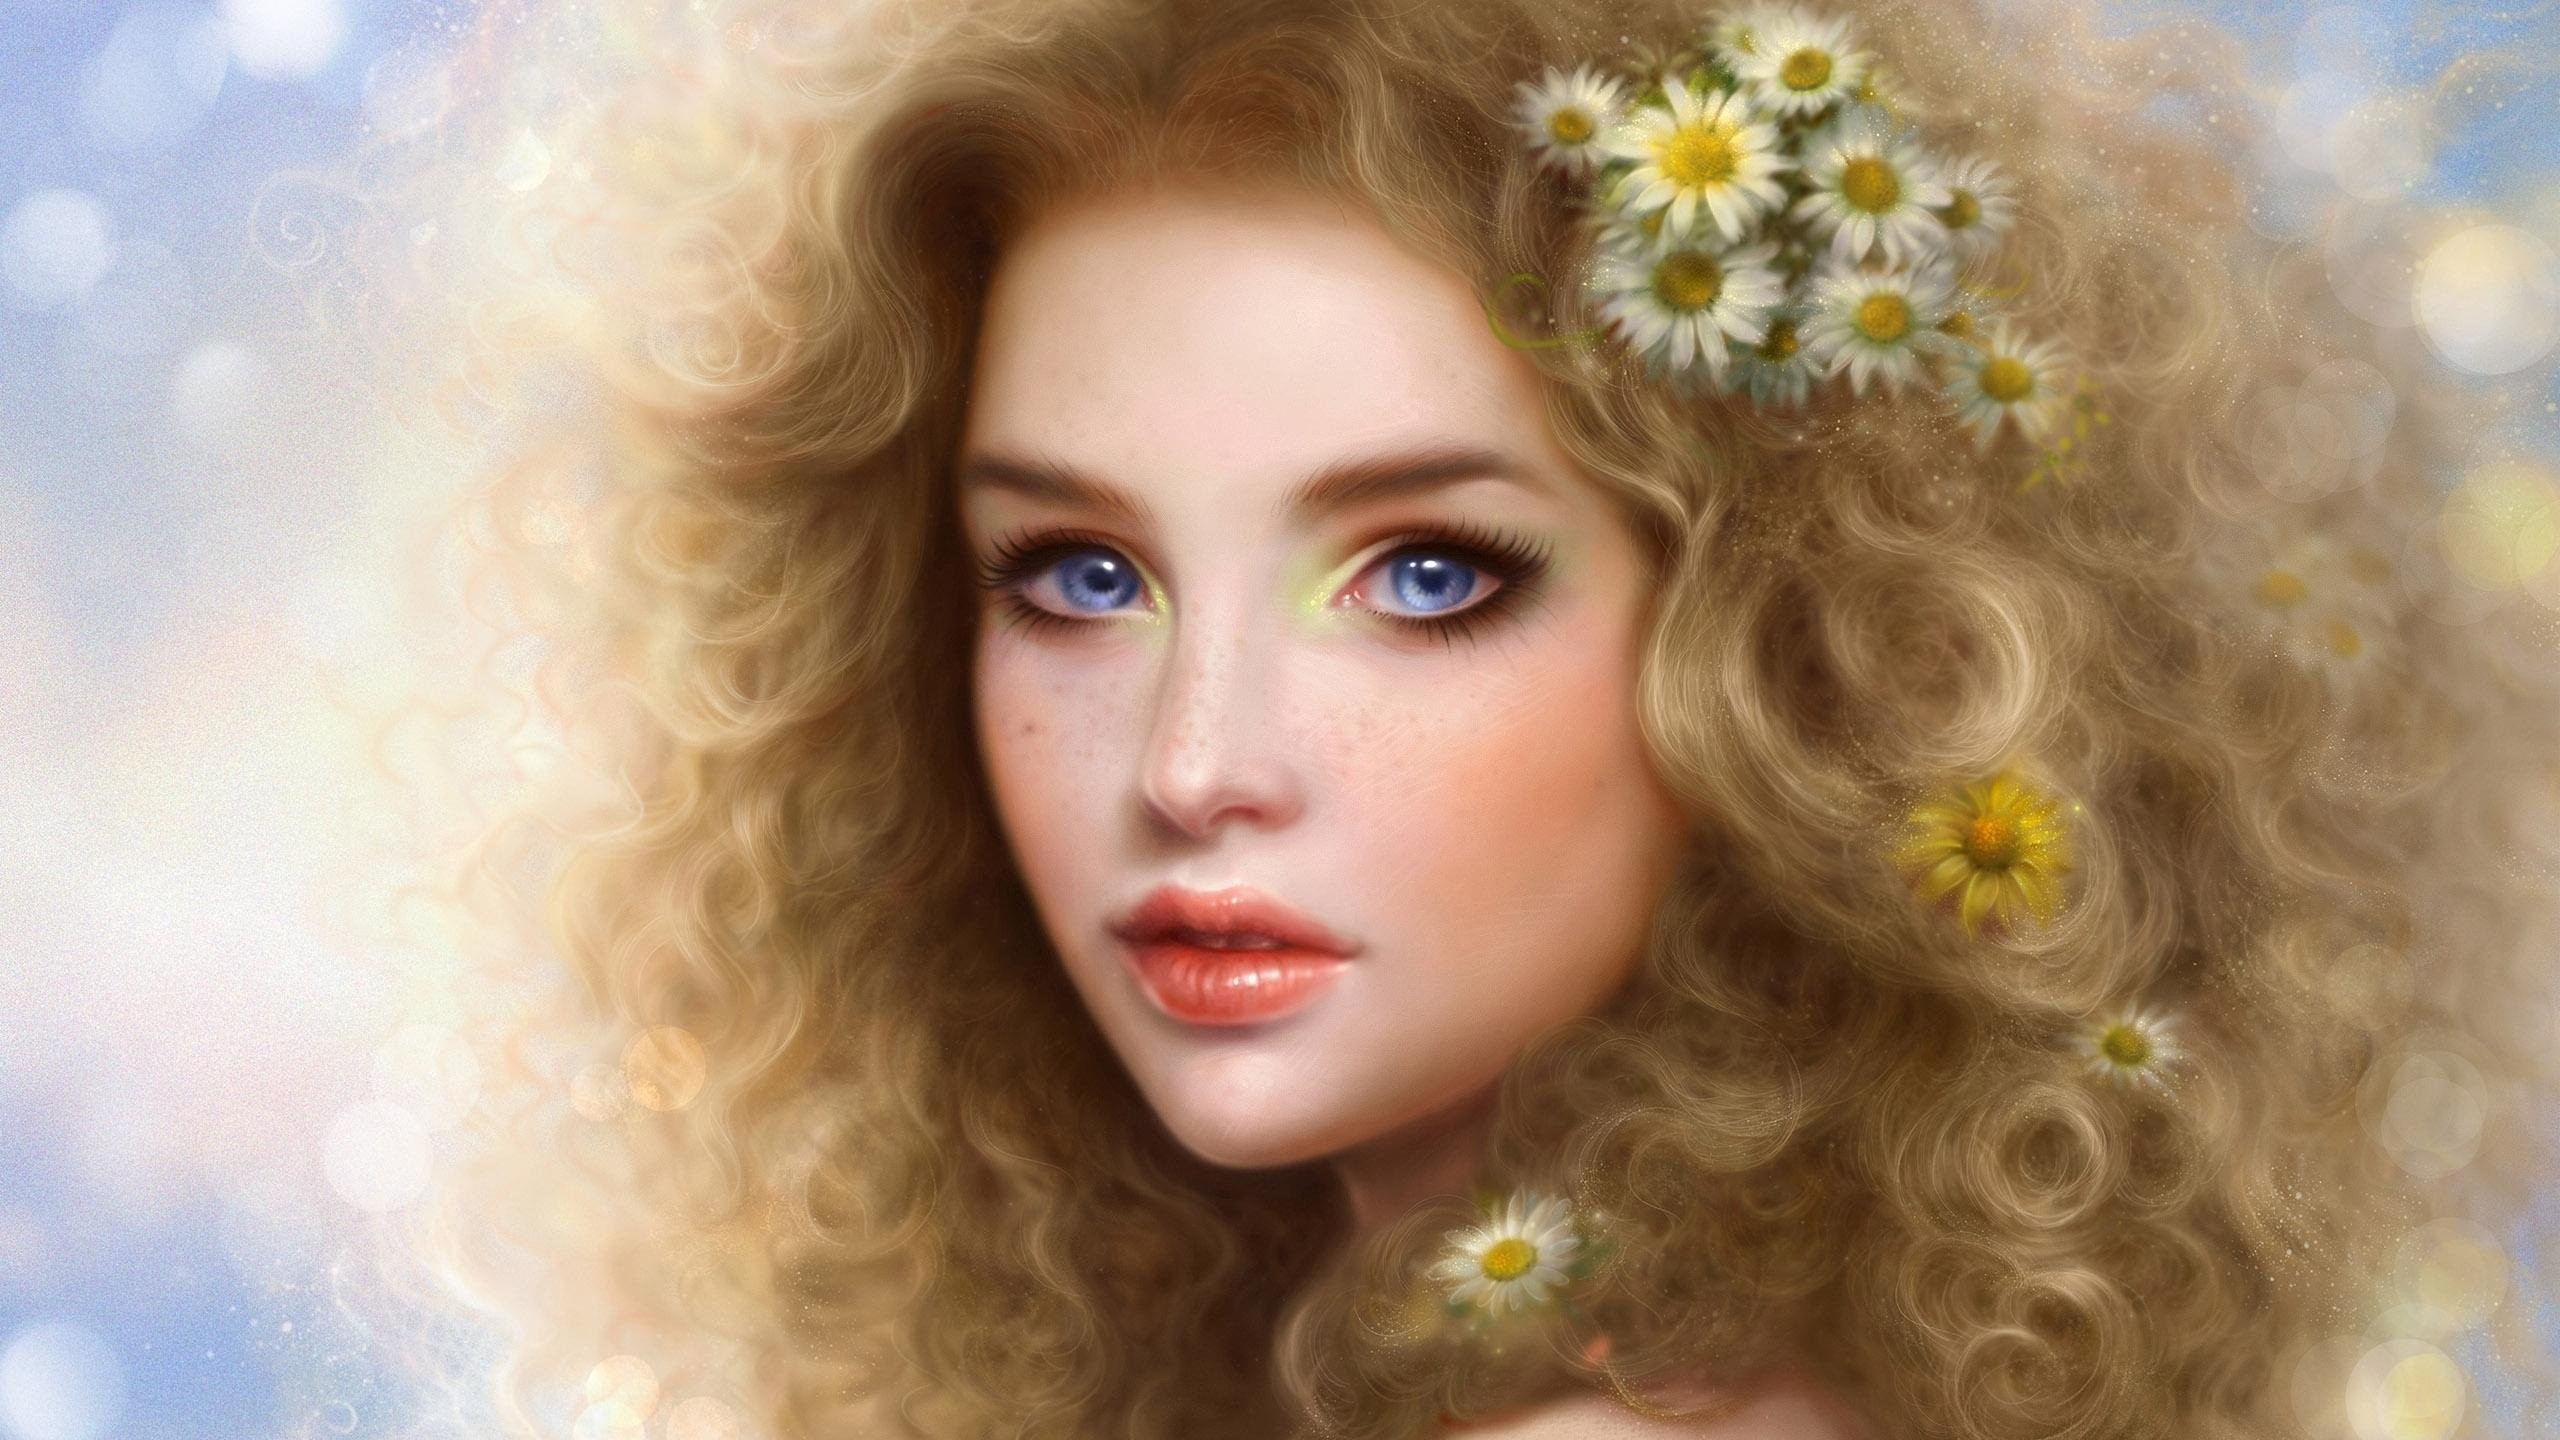 2560x1440 Fantasy girl blue eyes beautiful face blonde girl daisy hair flower  wallpaper |  | 594493 | WallpaperUP